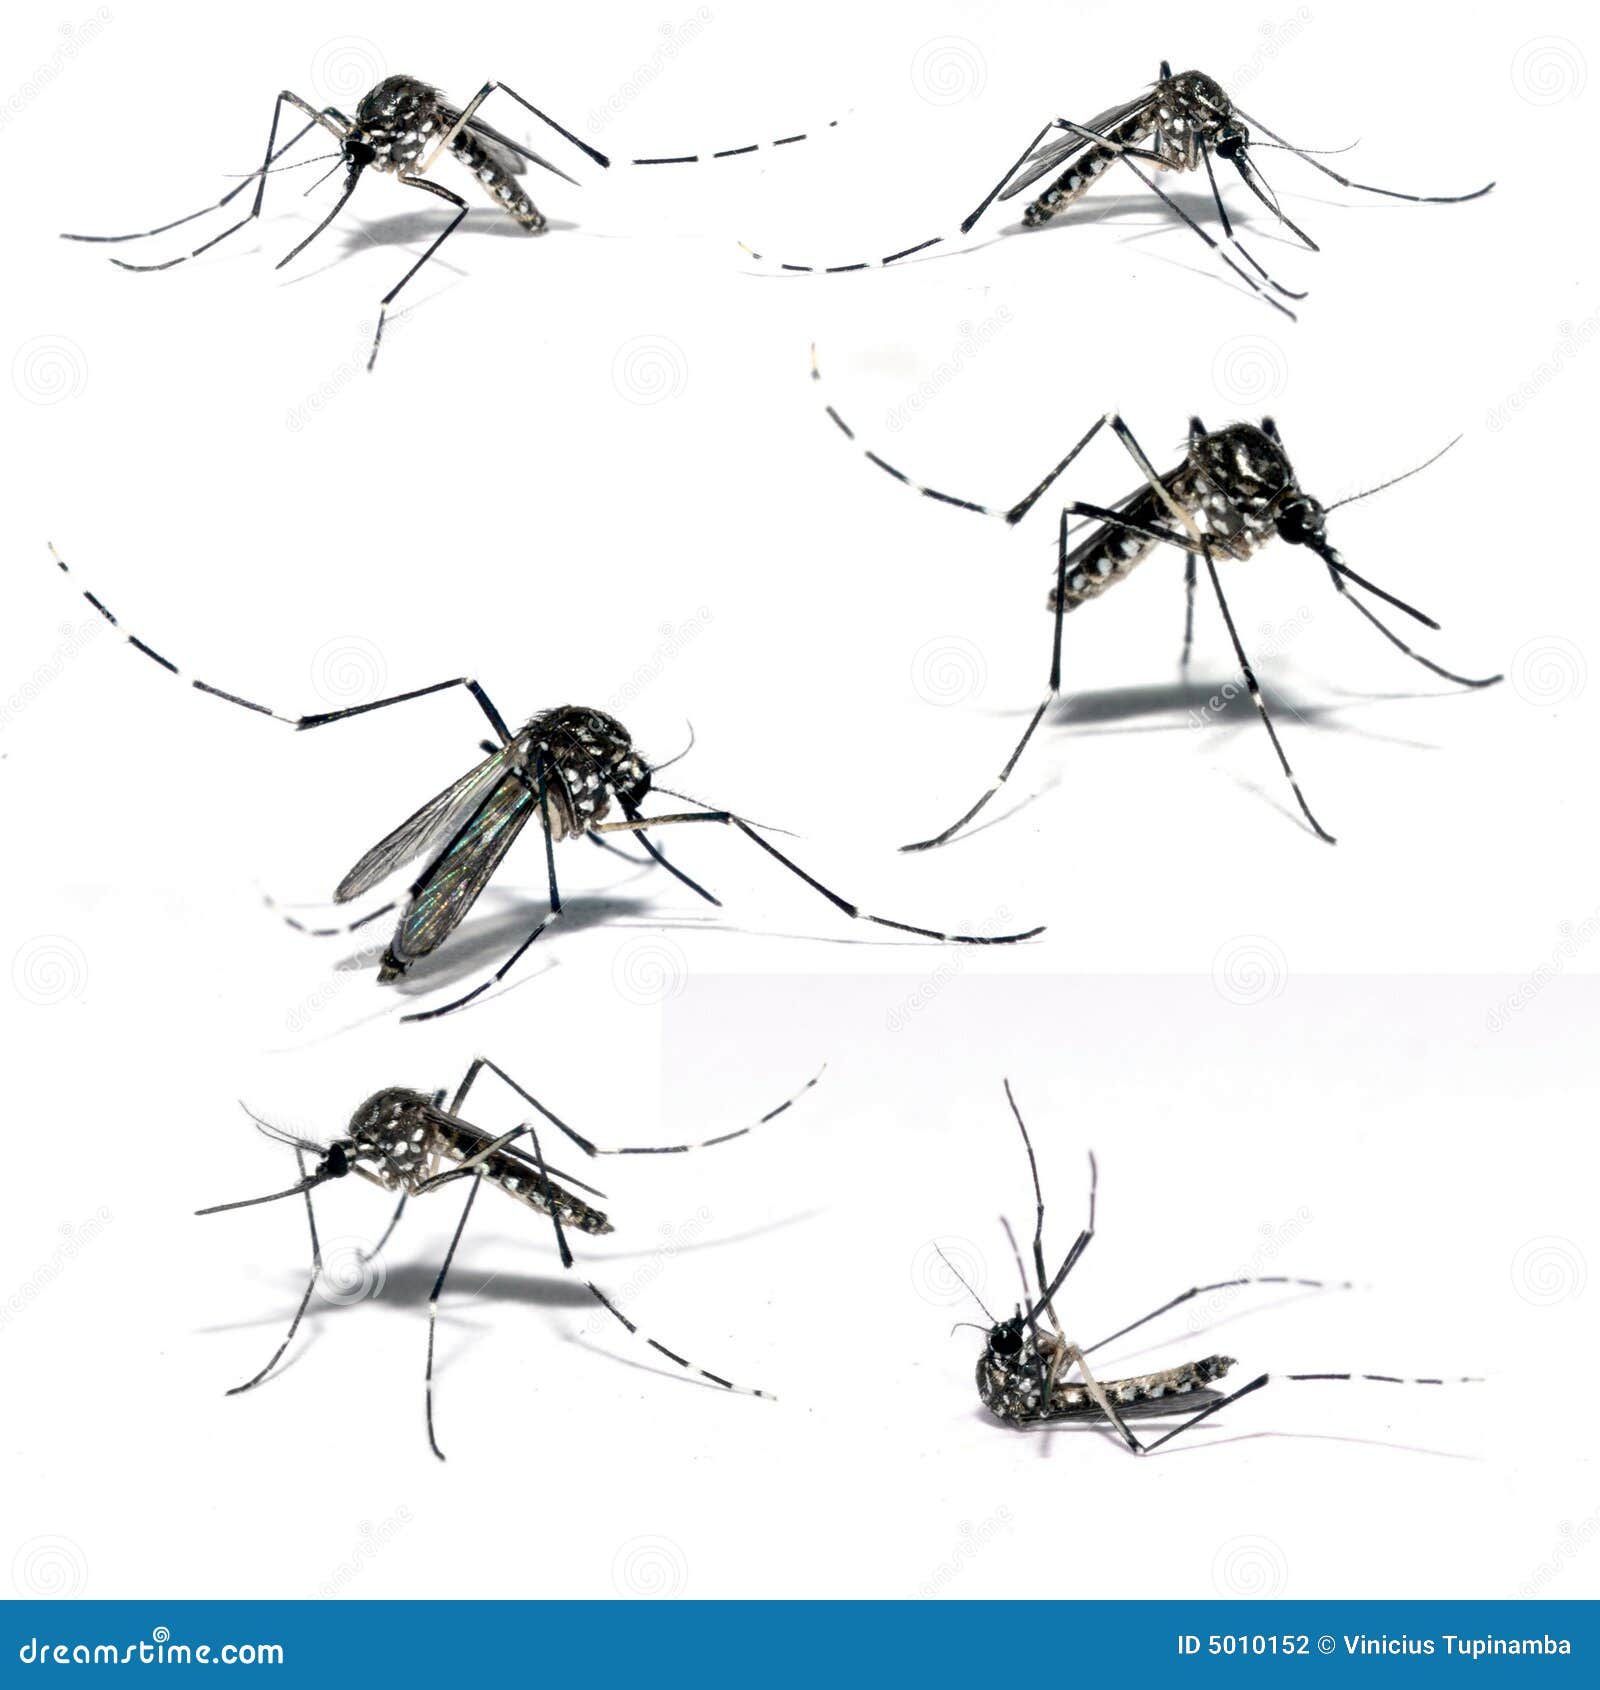 mosquito of dengue